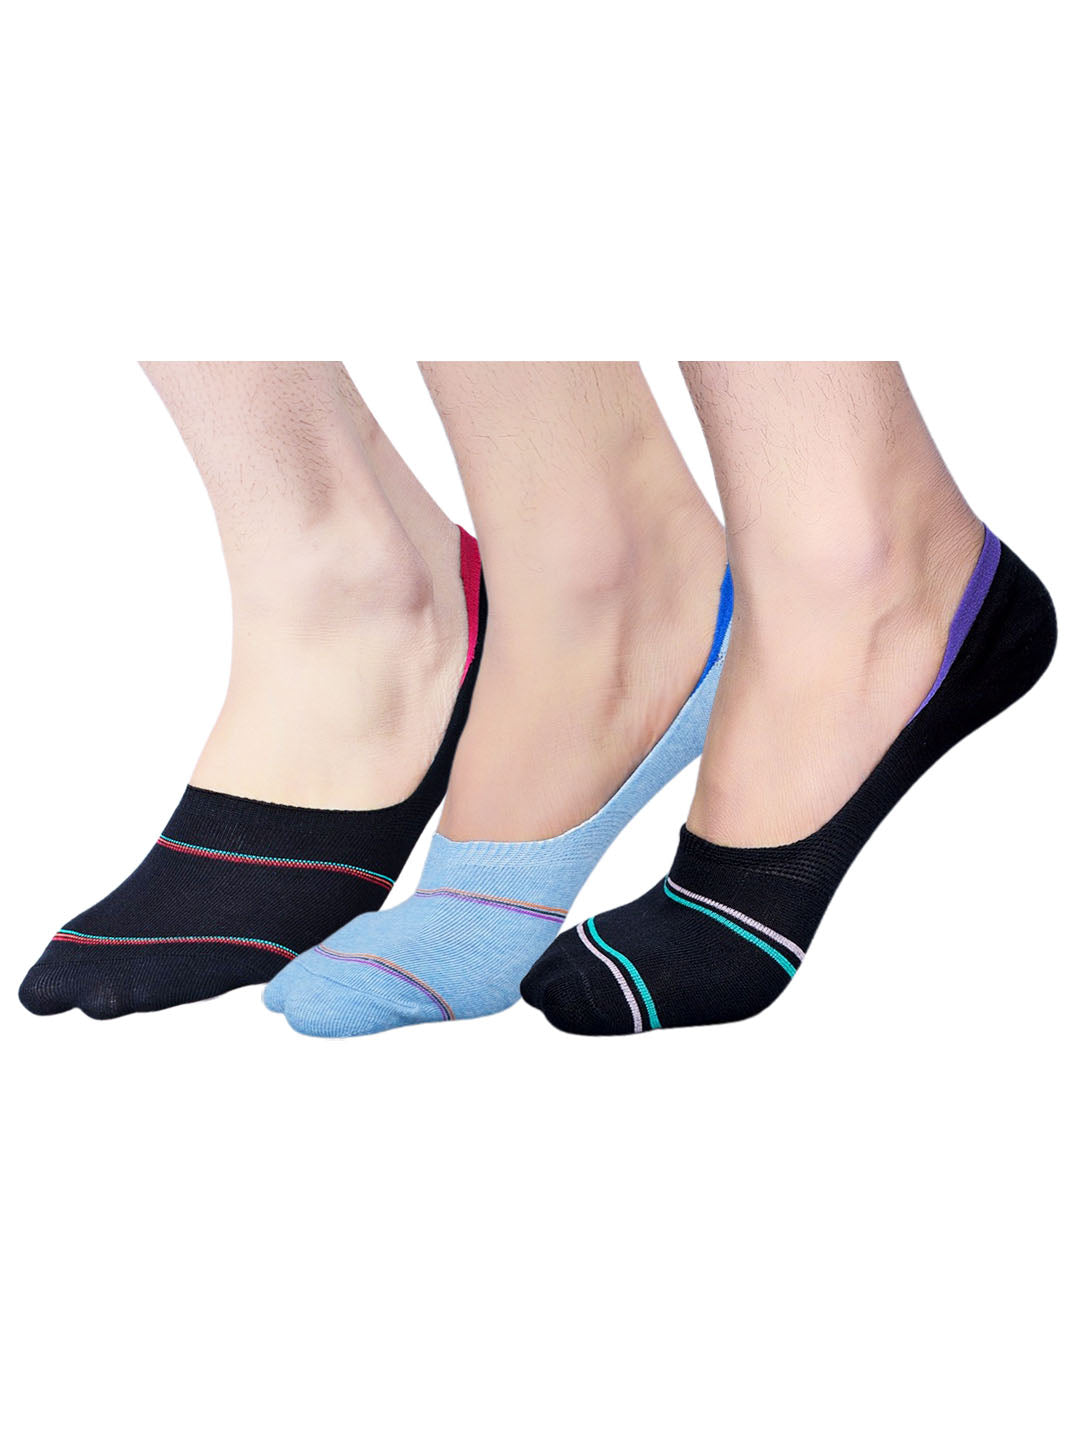 Cobb Multi Color Footie Shoe Liner Socks Pack of 3